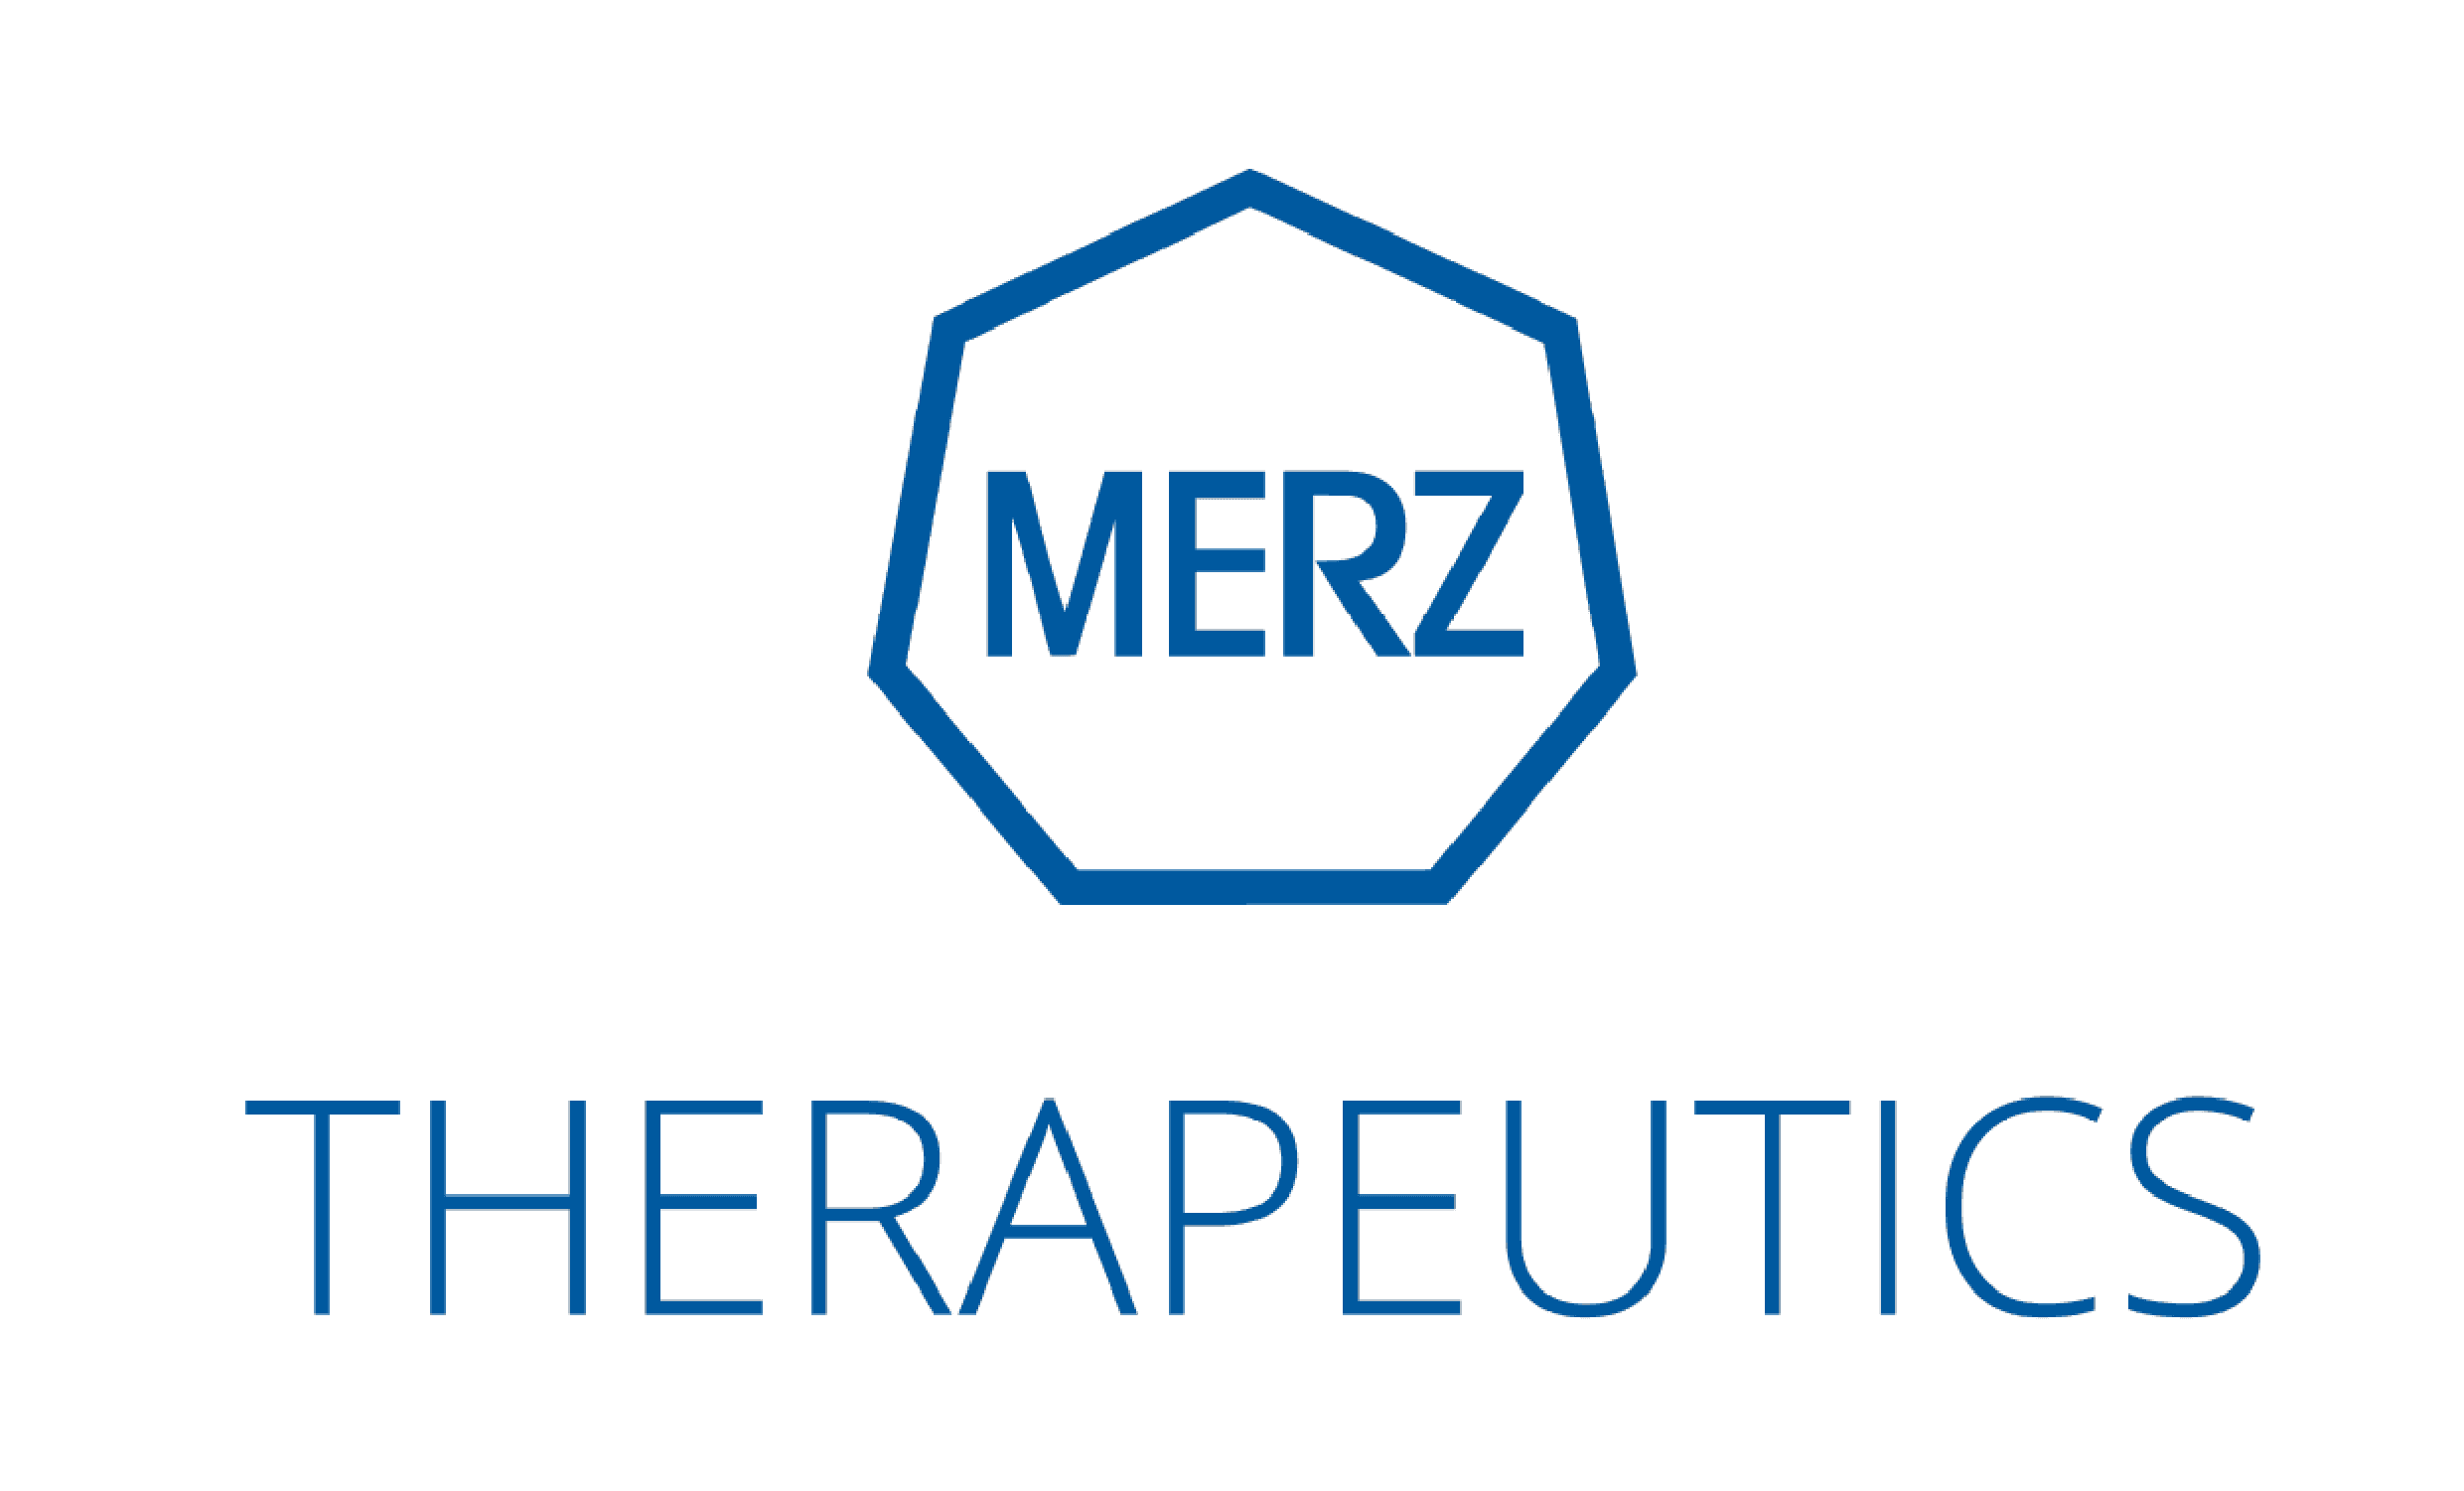 Merz Therapeutics logo